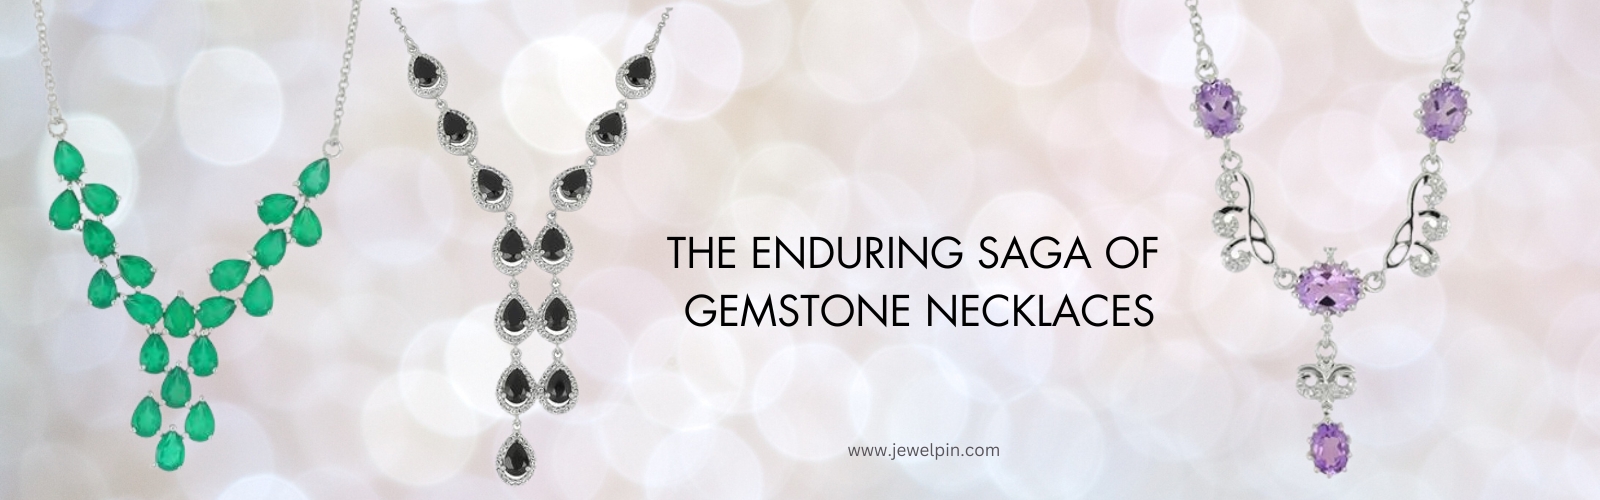 elemental elegance to timeless treasures the enduring saga of gemstone necklaces